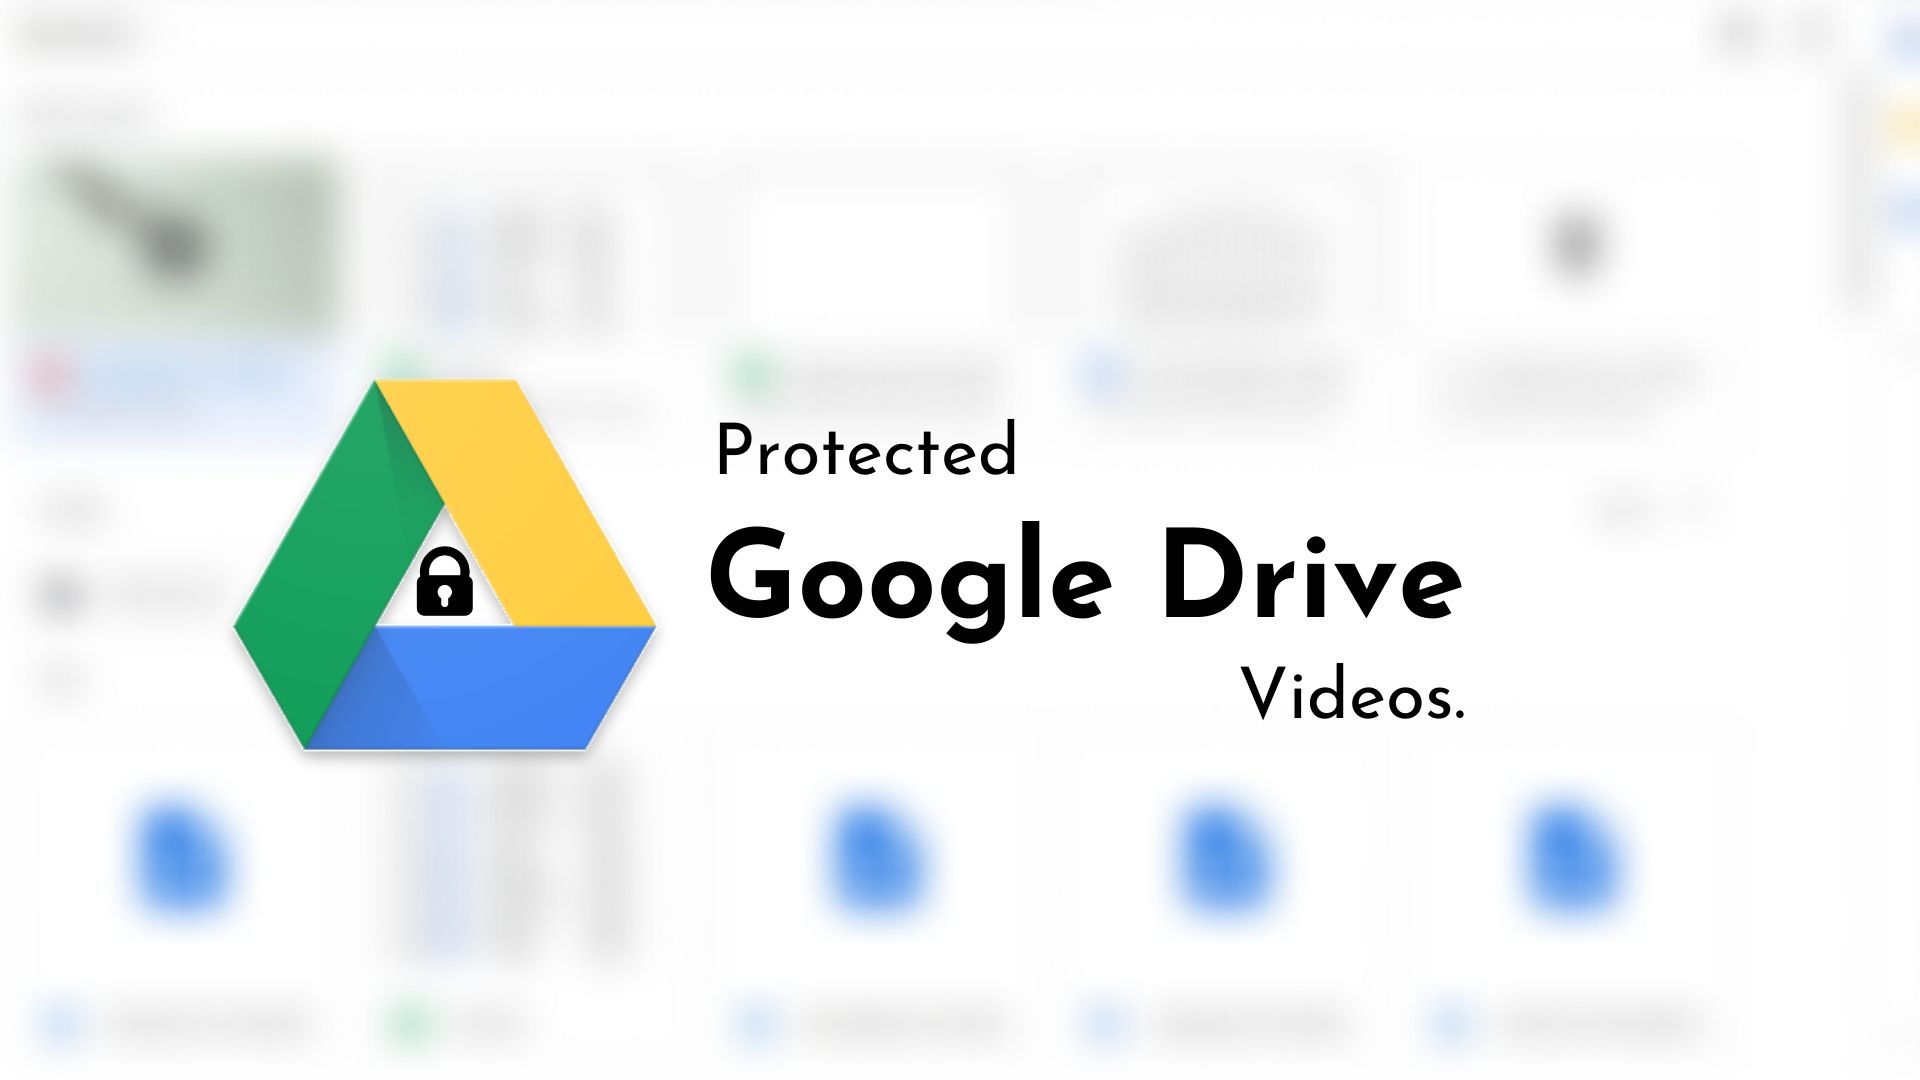 google drive download movies